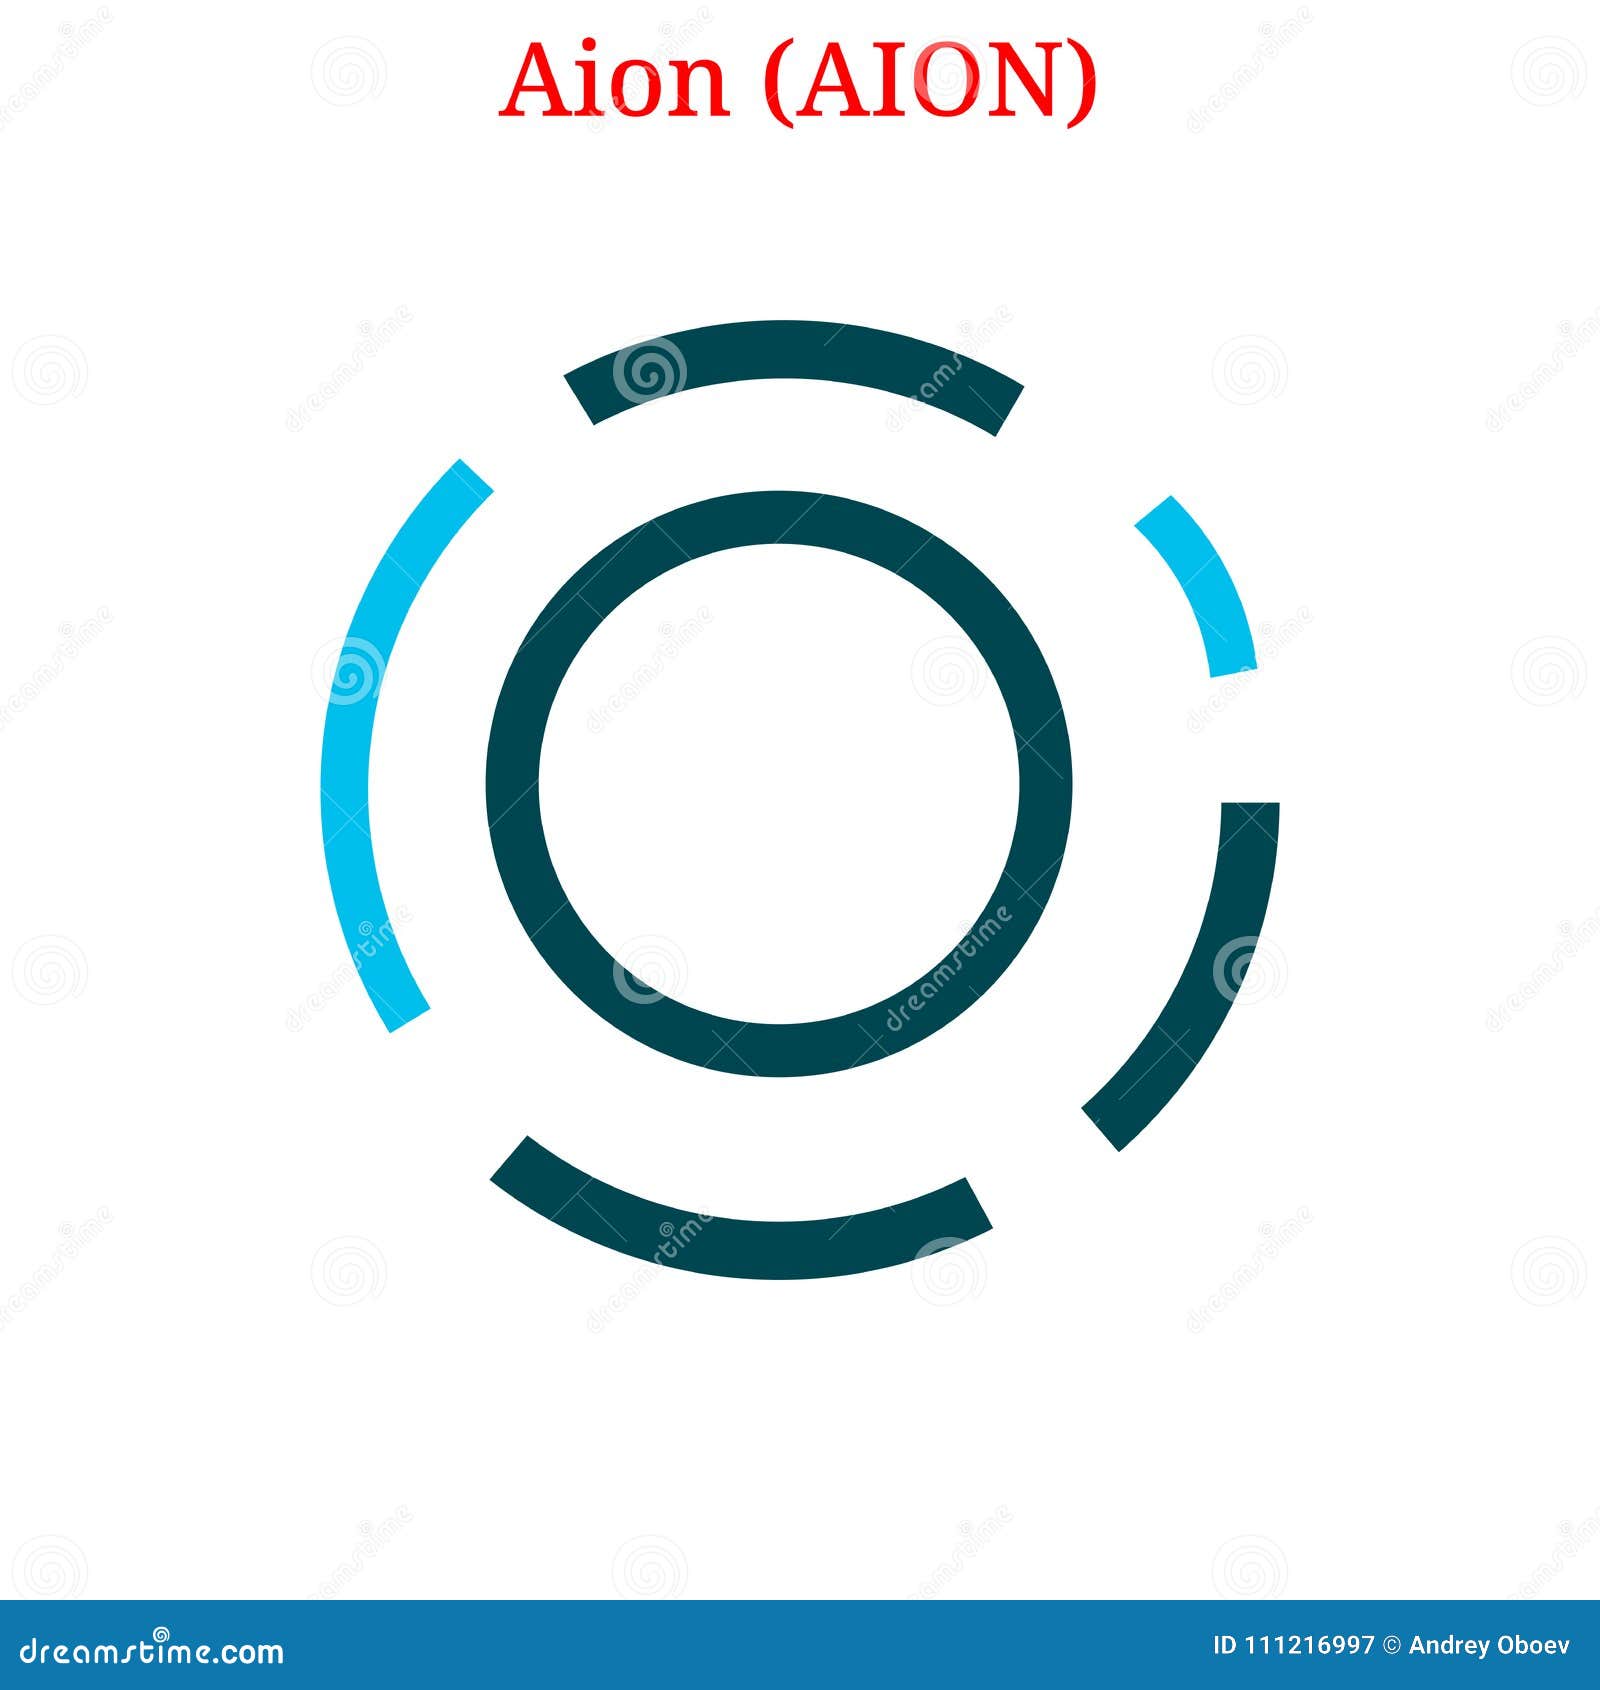 Vector Aion AION logo stock vector. Illustration of cash ...